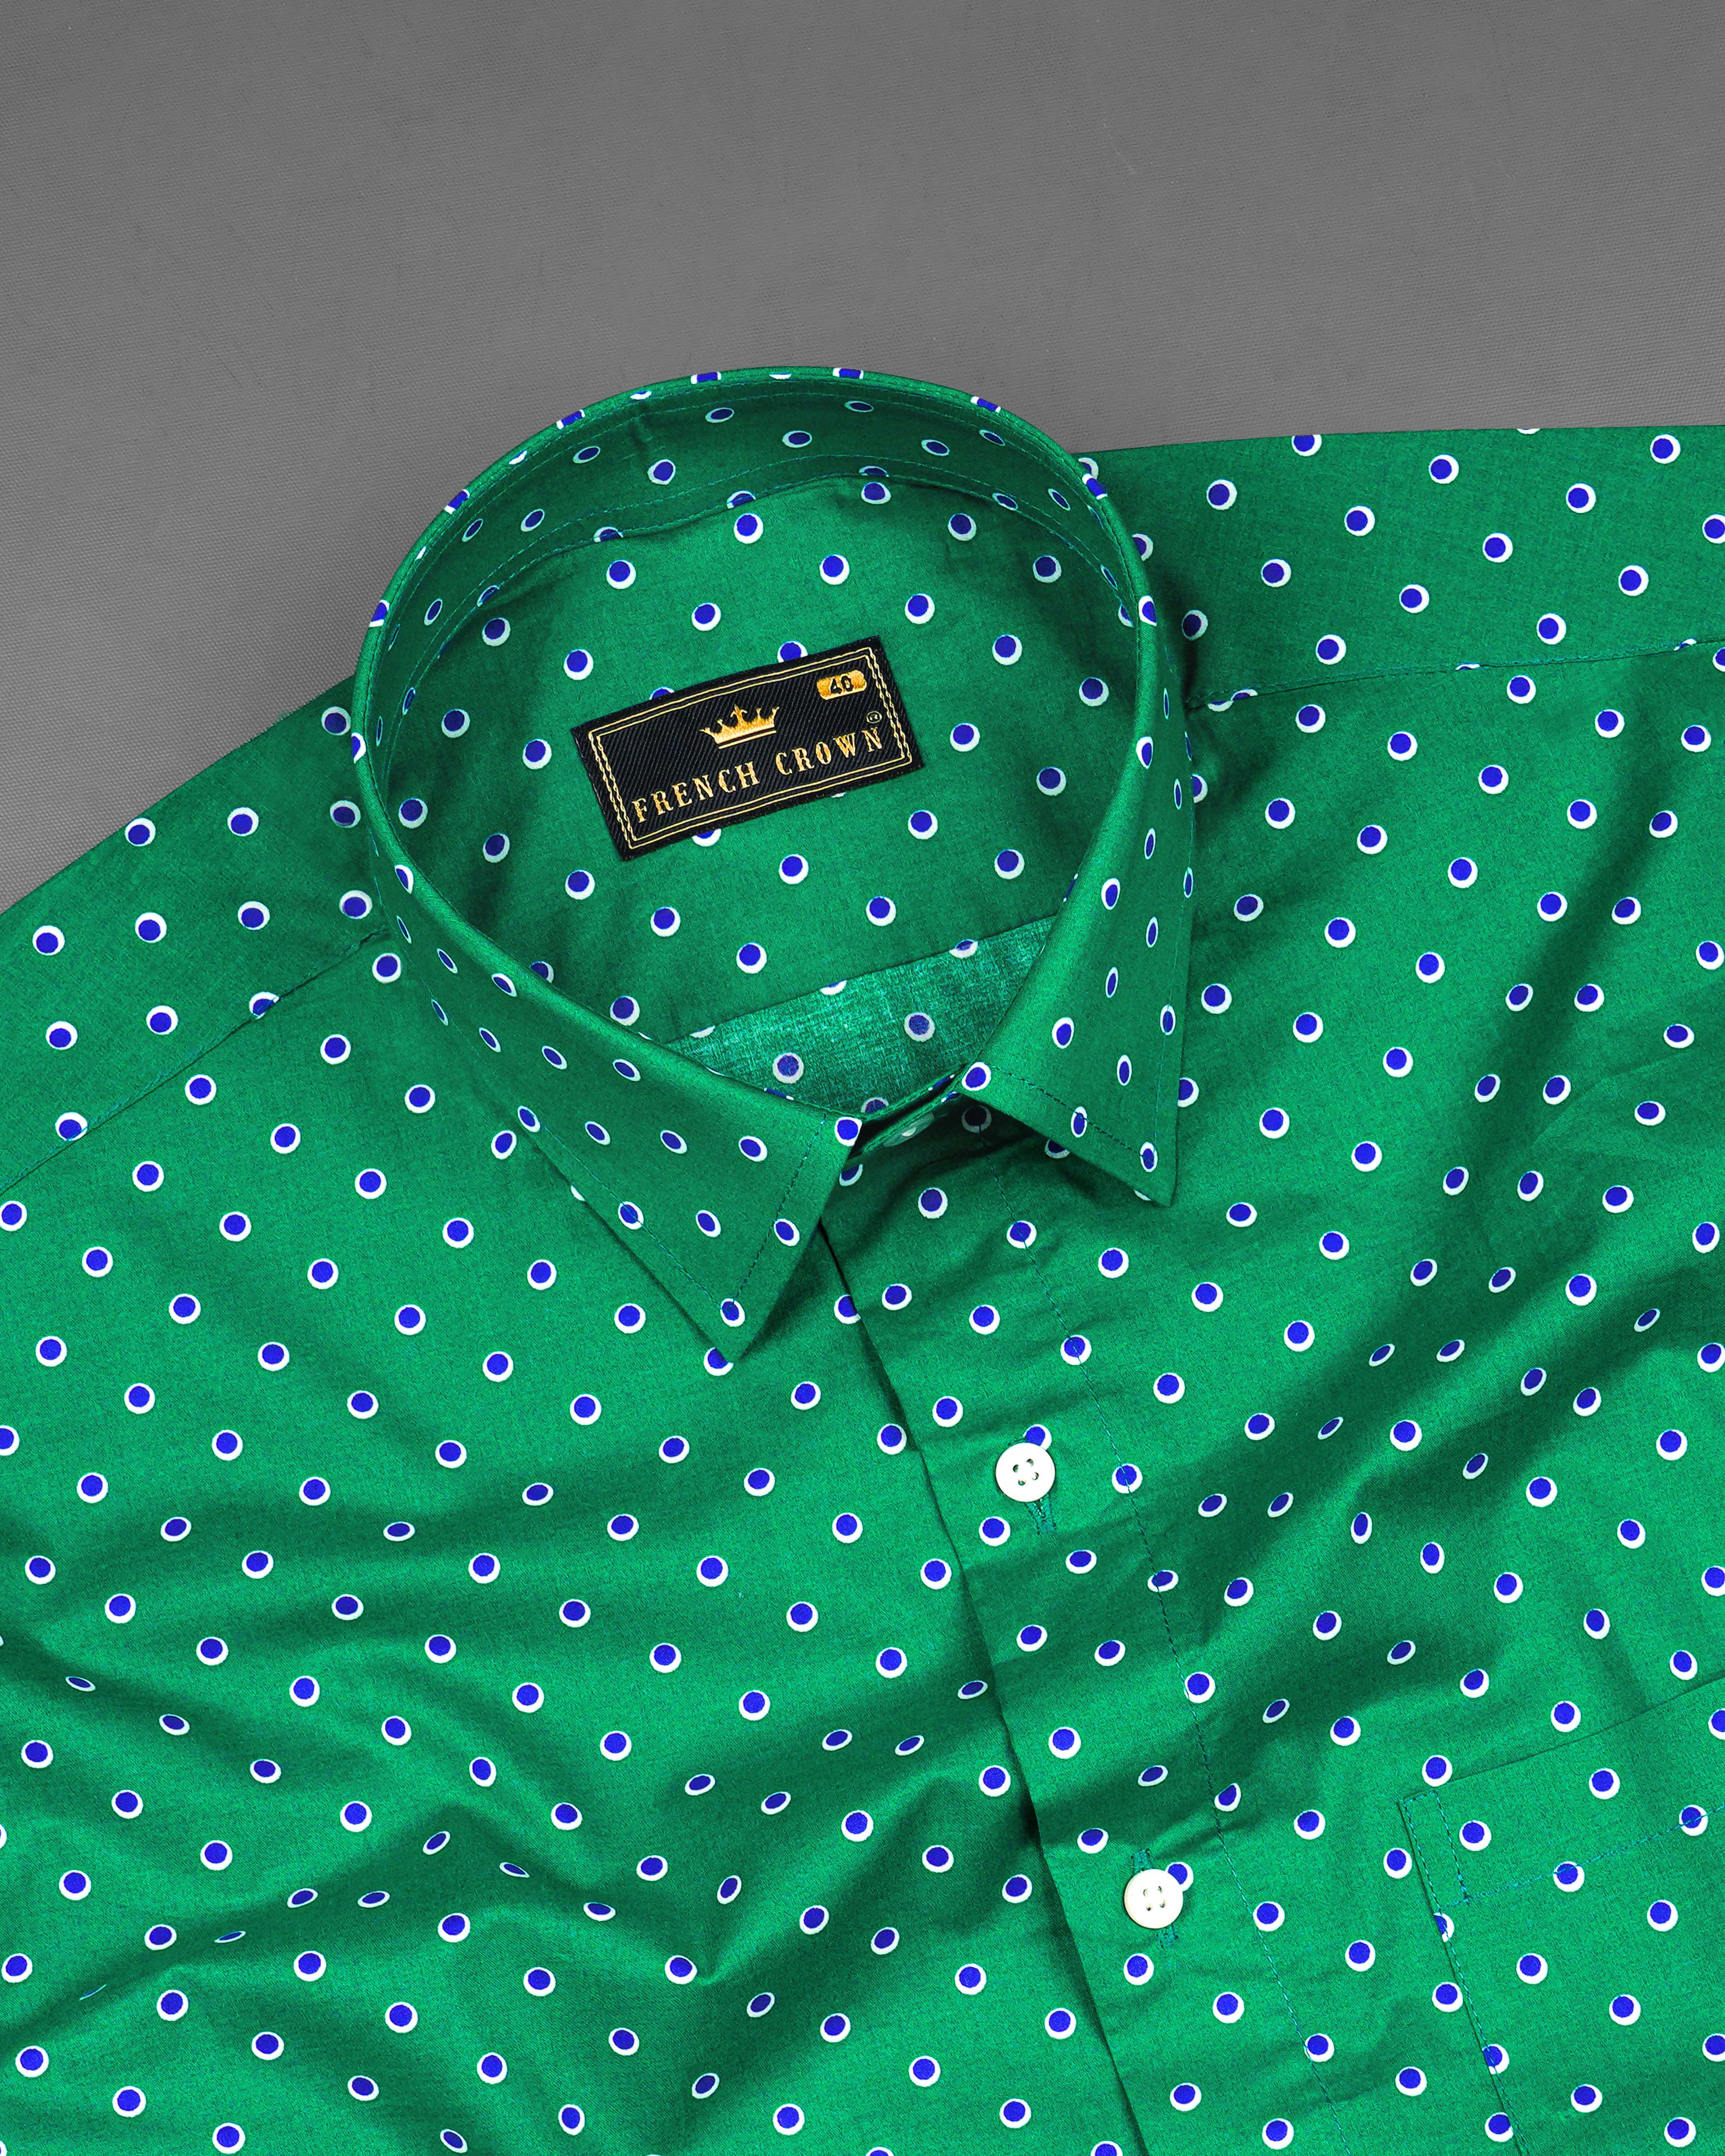 Eucalyptus Green Evil Eye Printed Premium Cotton Shirt 8131-38, 8131-H-38, 8131-39, 8131-H-39, 8131-40, 8131-H-40, 8131-42, 8131-H-42, 8131-44, 8131-H-44, 8131-46, 8131-H-46, 8131-48, 8131-H-48, 8131-50, 8131-H-50, 8131-52, 8131-H-52